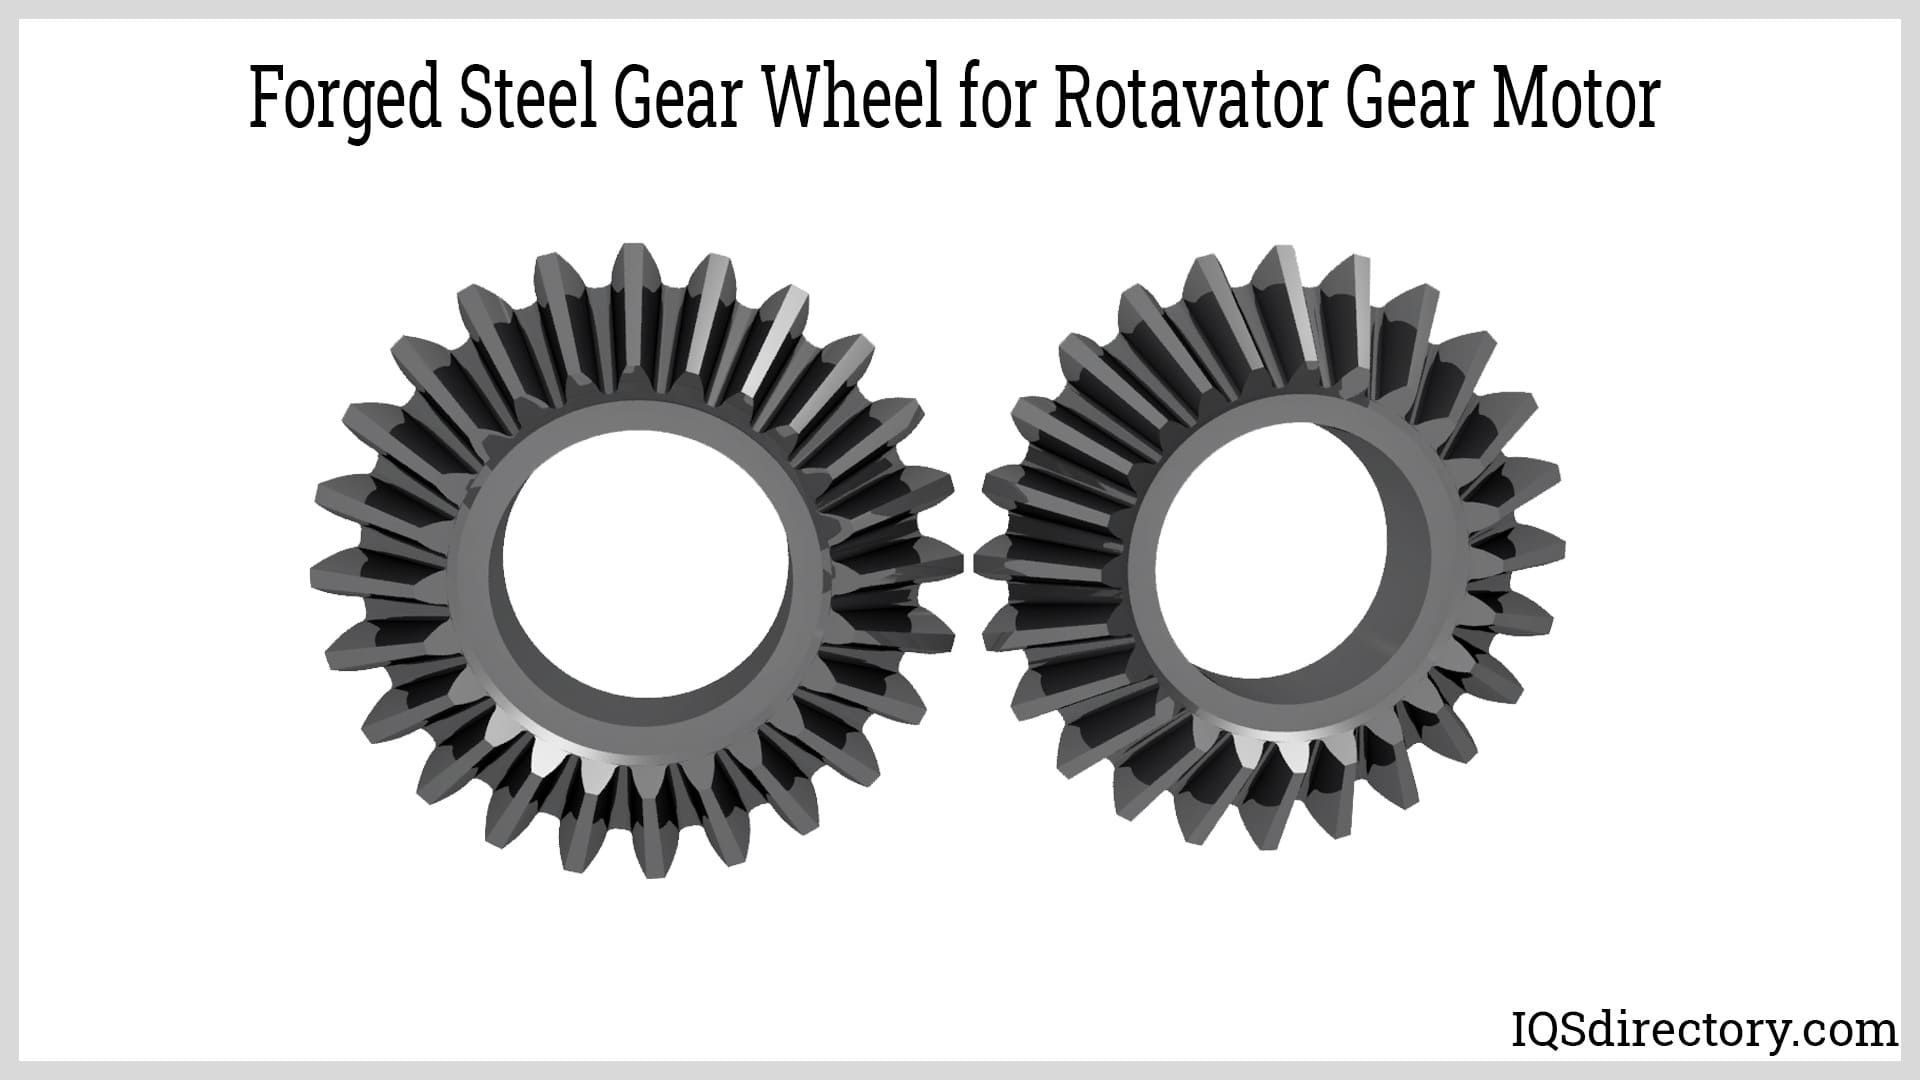 Forged Steel Gear Wheel for Rotavator Gear Motor